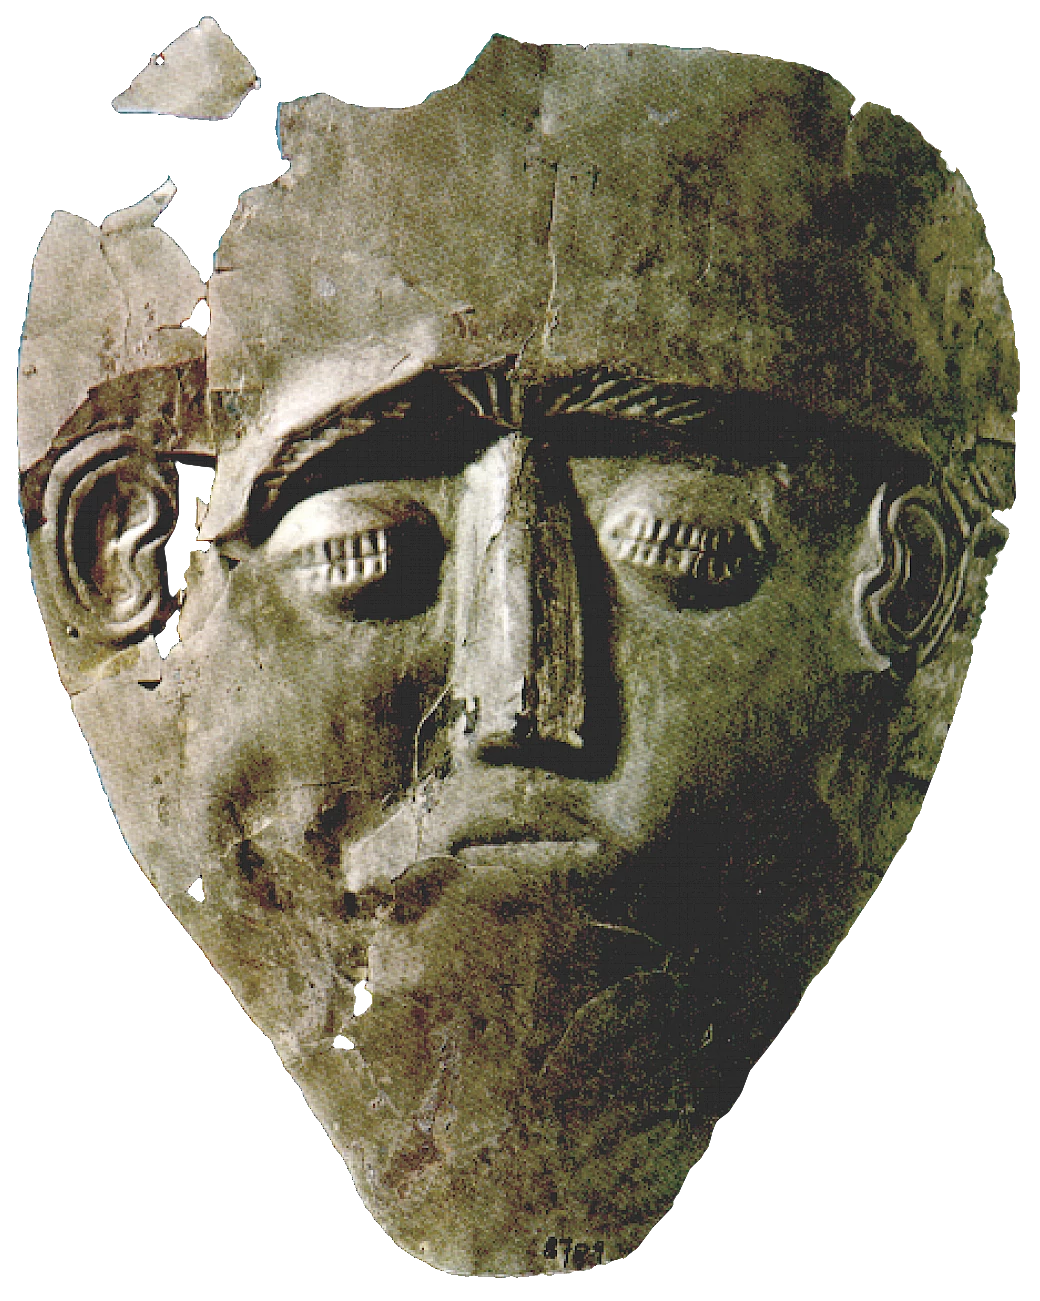 Electrum Grave Mask from Grave Circle B, Aegean Civilizations